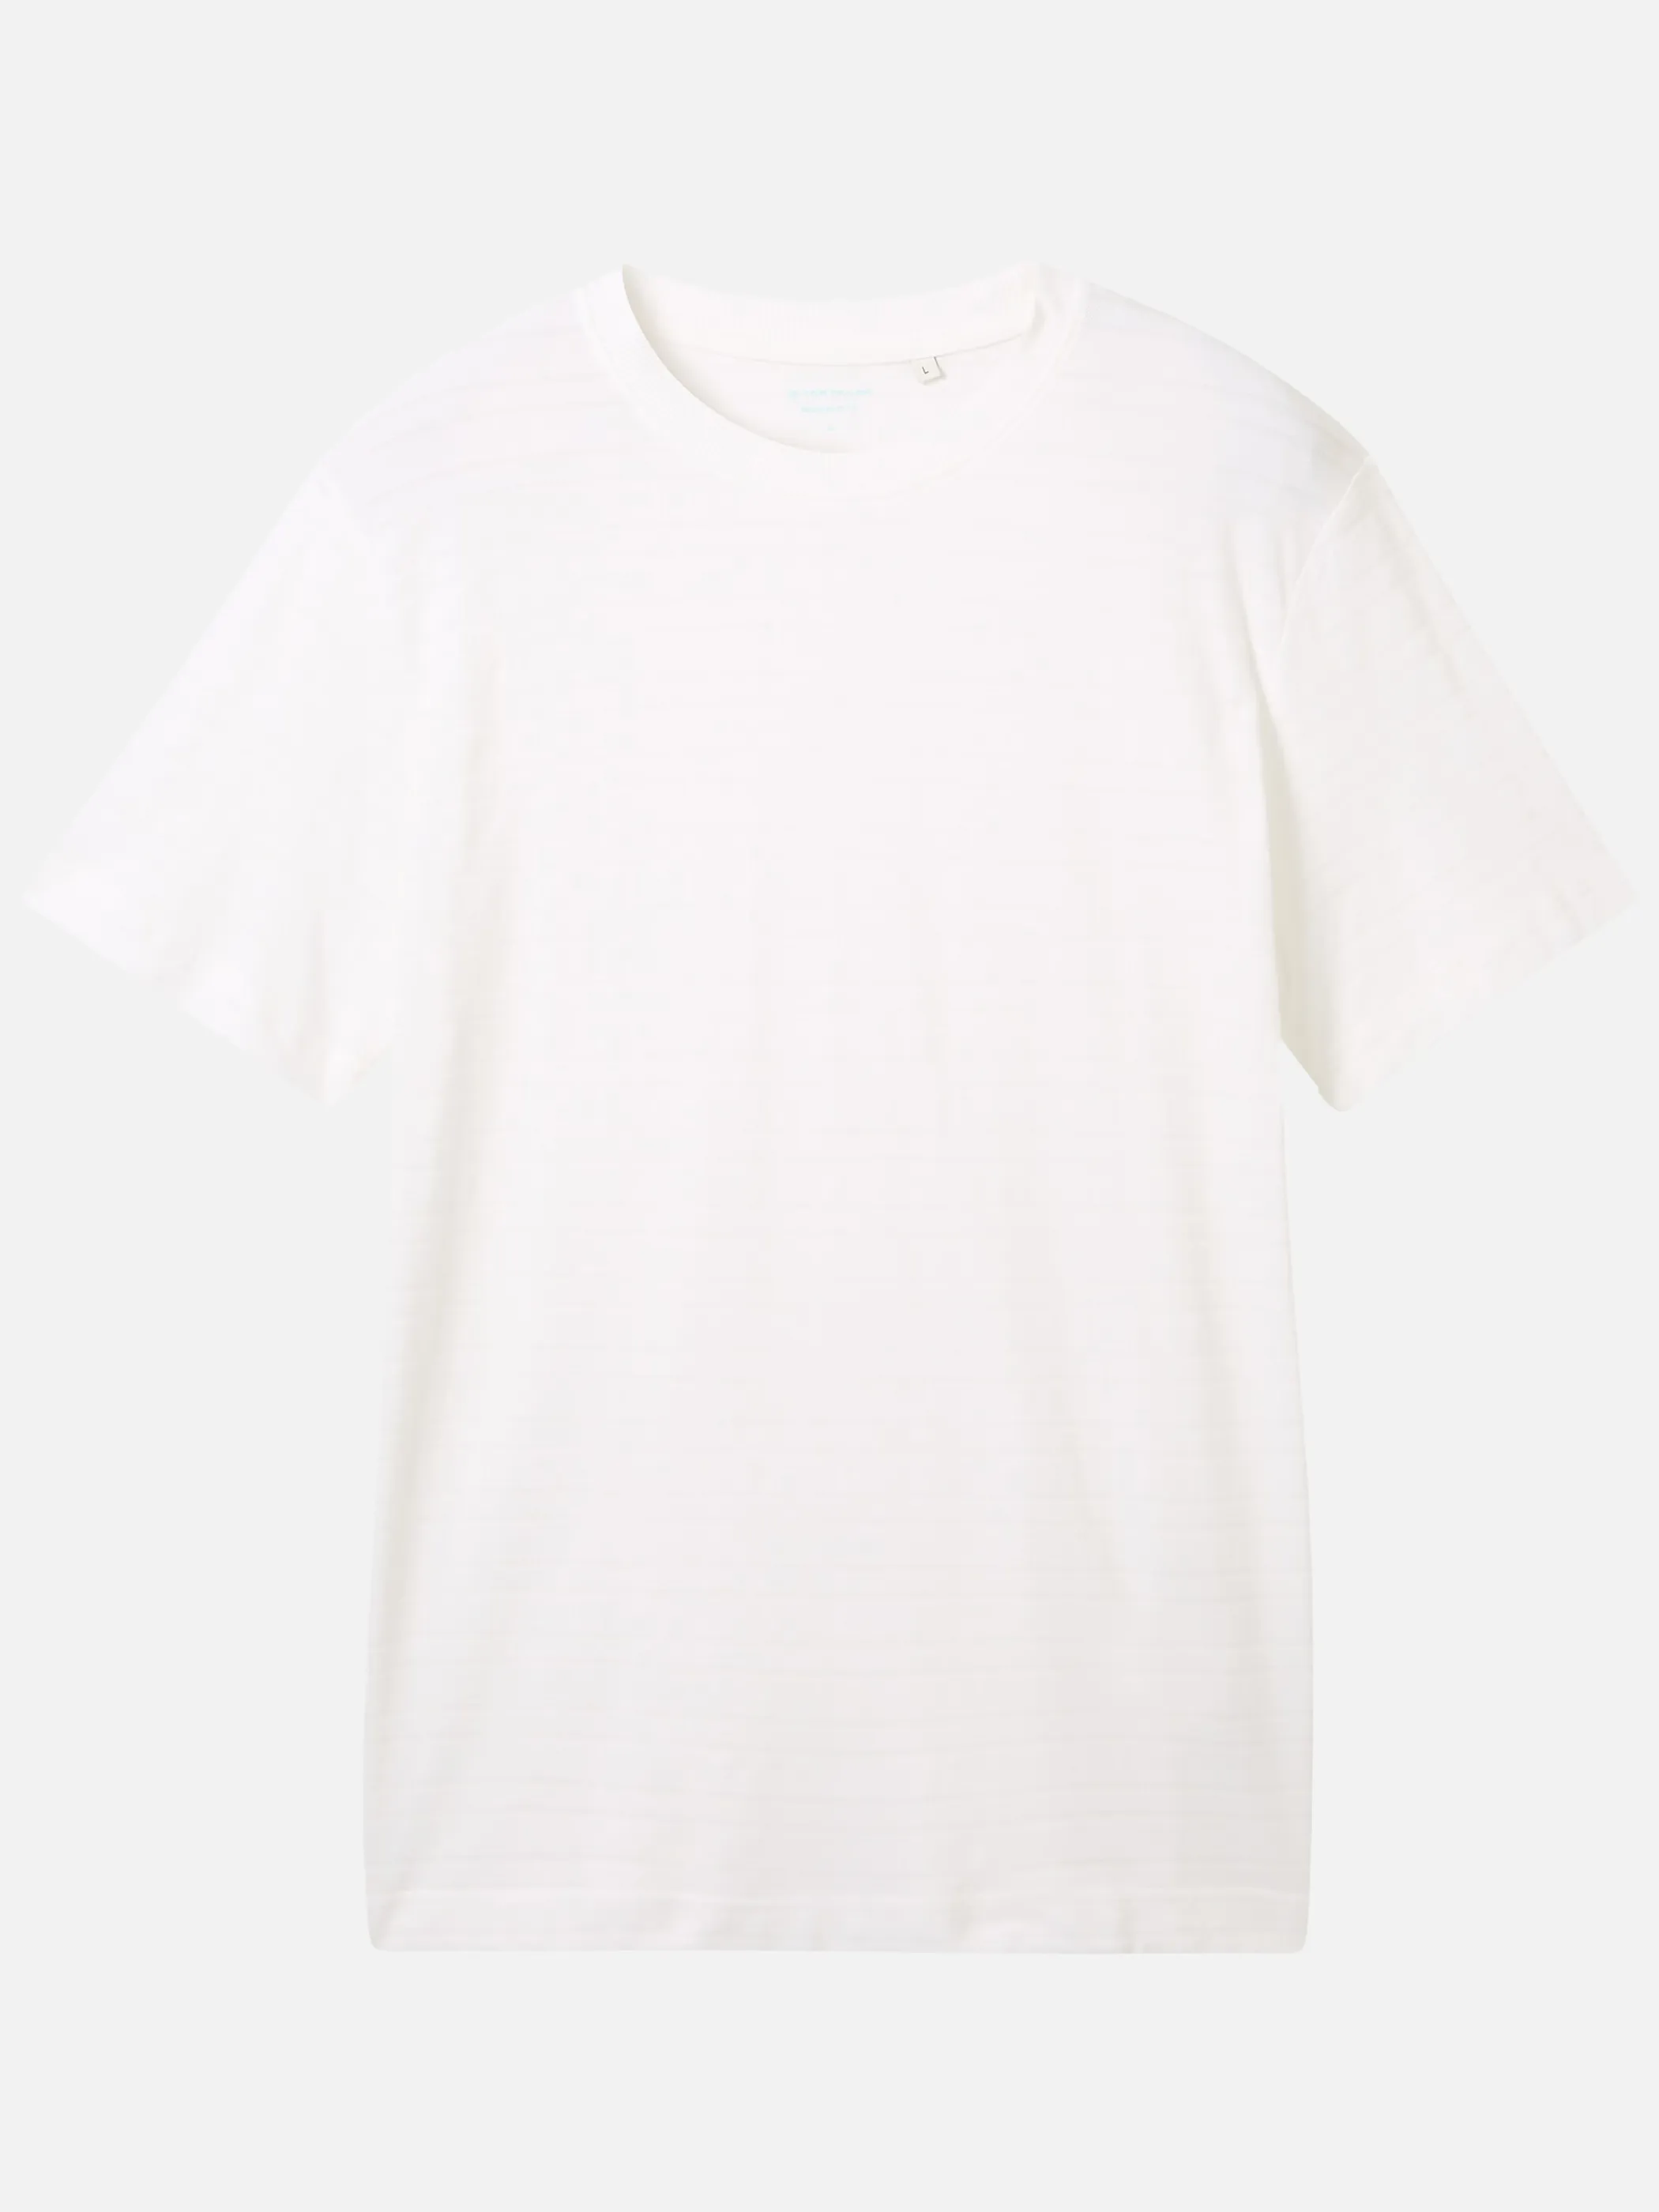 Tom Tailor 1042131 structured t-shirt Weiß 895628 20000 1